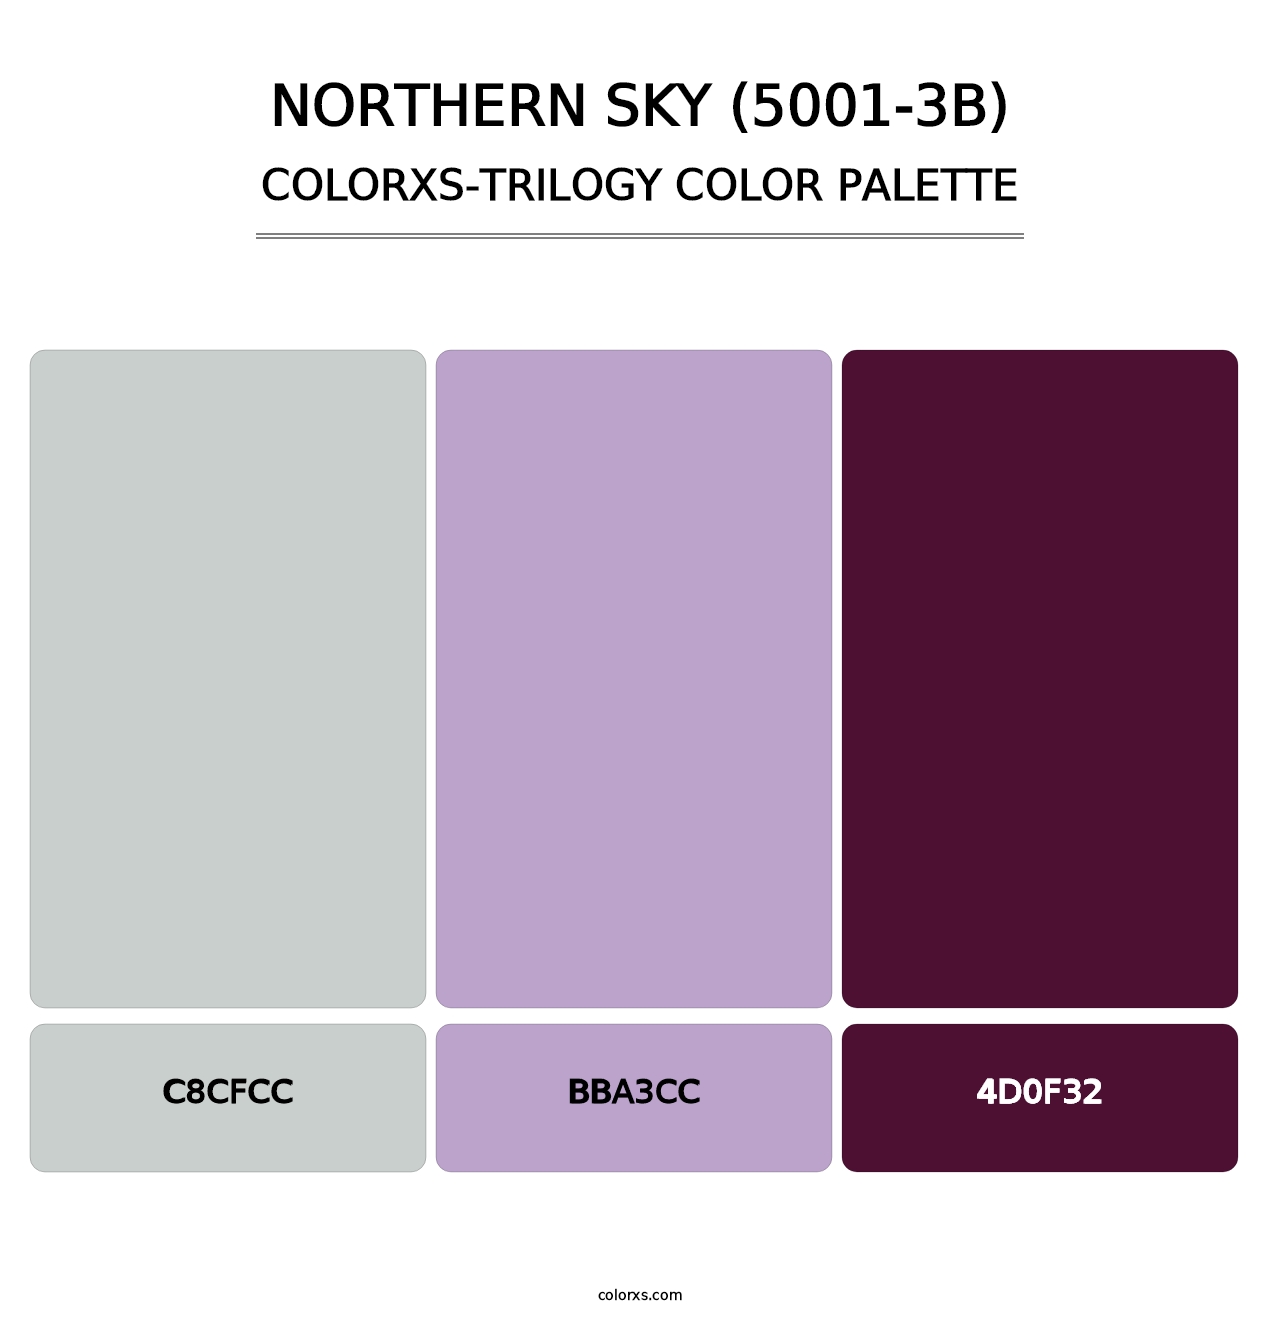 Northern Sky (5001-3B) - Colorxs Trilogy Palette